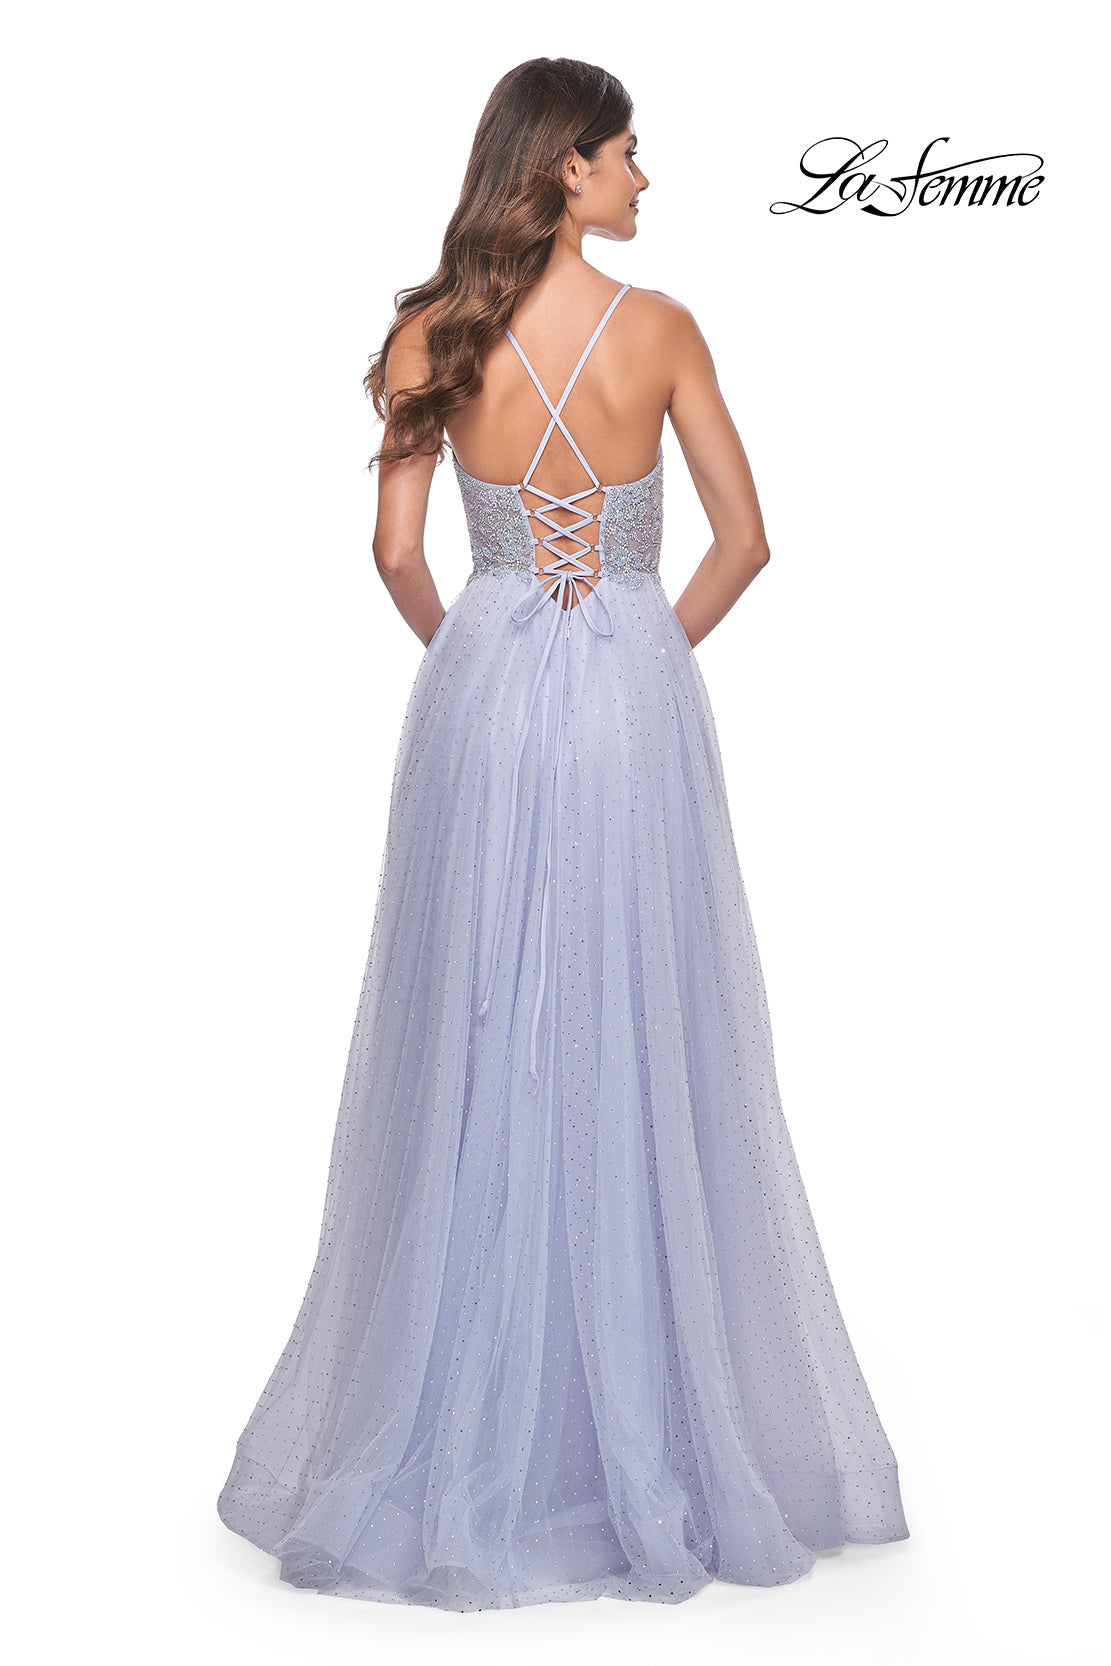 Prom Dress 32020 | Light Periwinkle